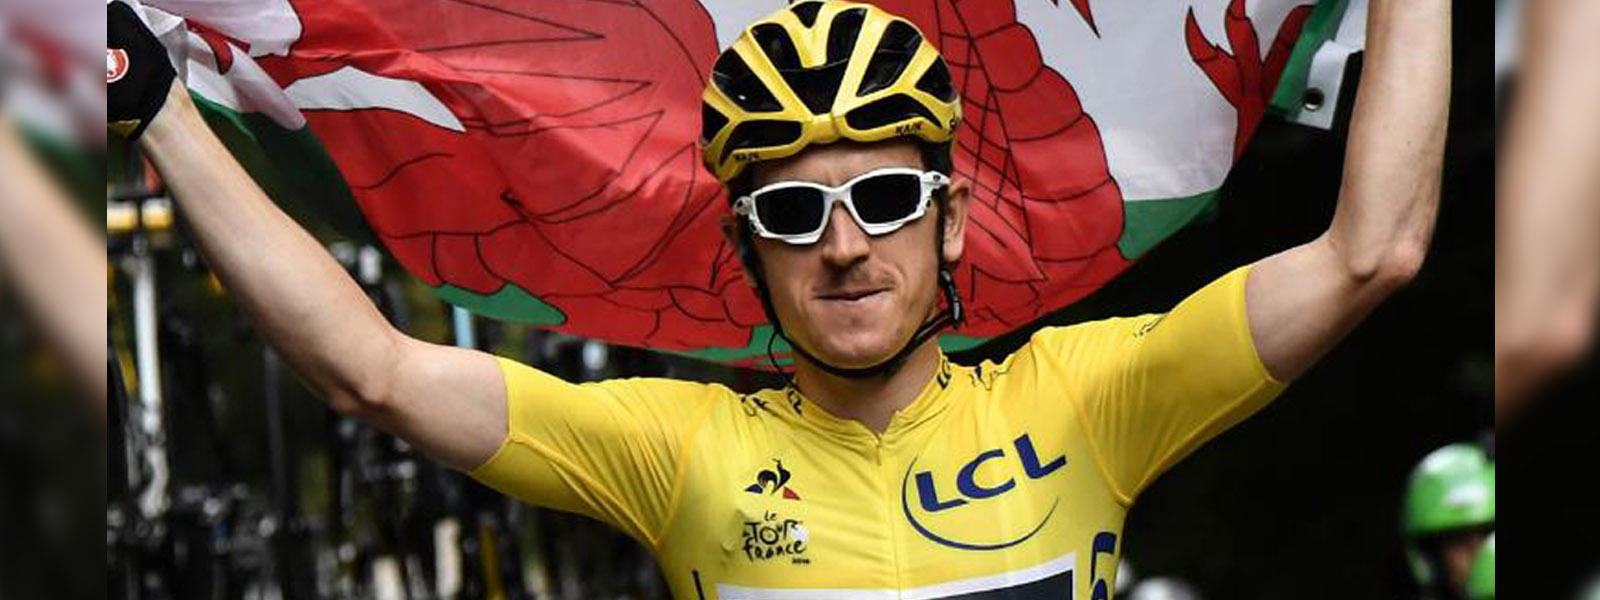 Tour de France win 'a dream' for Thomas